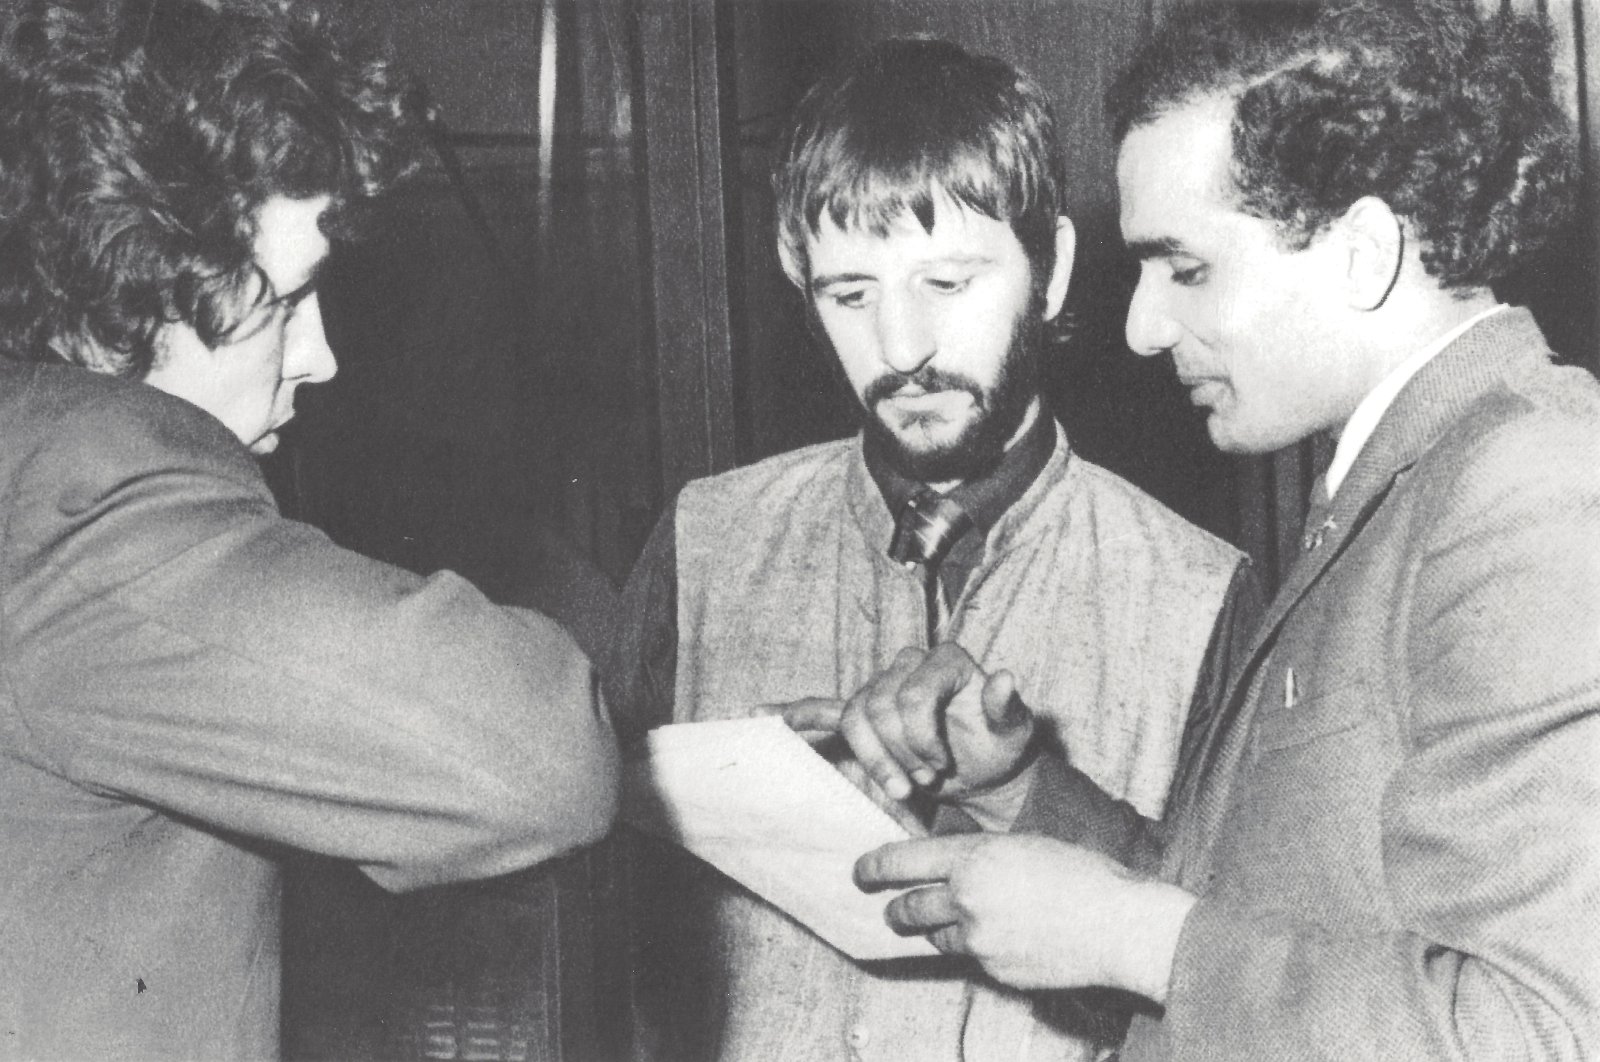 Suresh Joshi meets with engineer John Brahn and Ringo Starr in Liverpool, in 1968. (Liverpool Beatles Museum via Reuters)